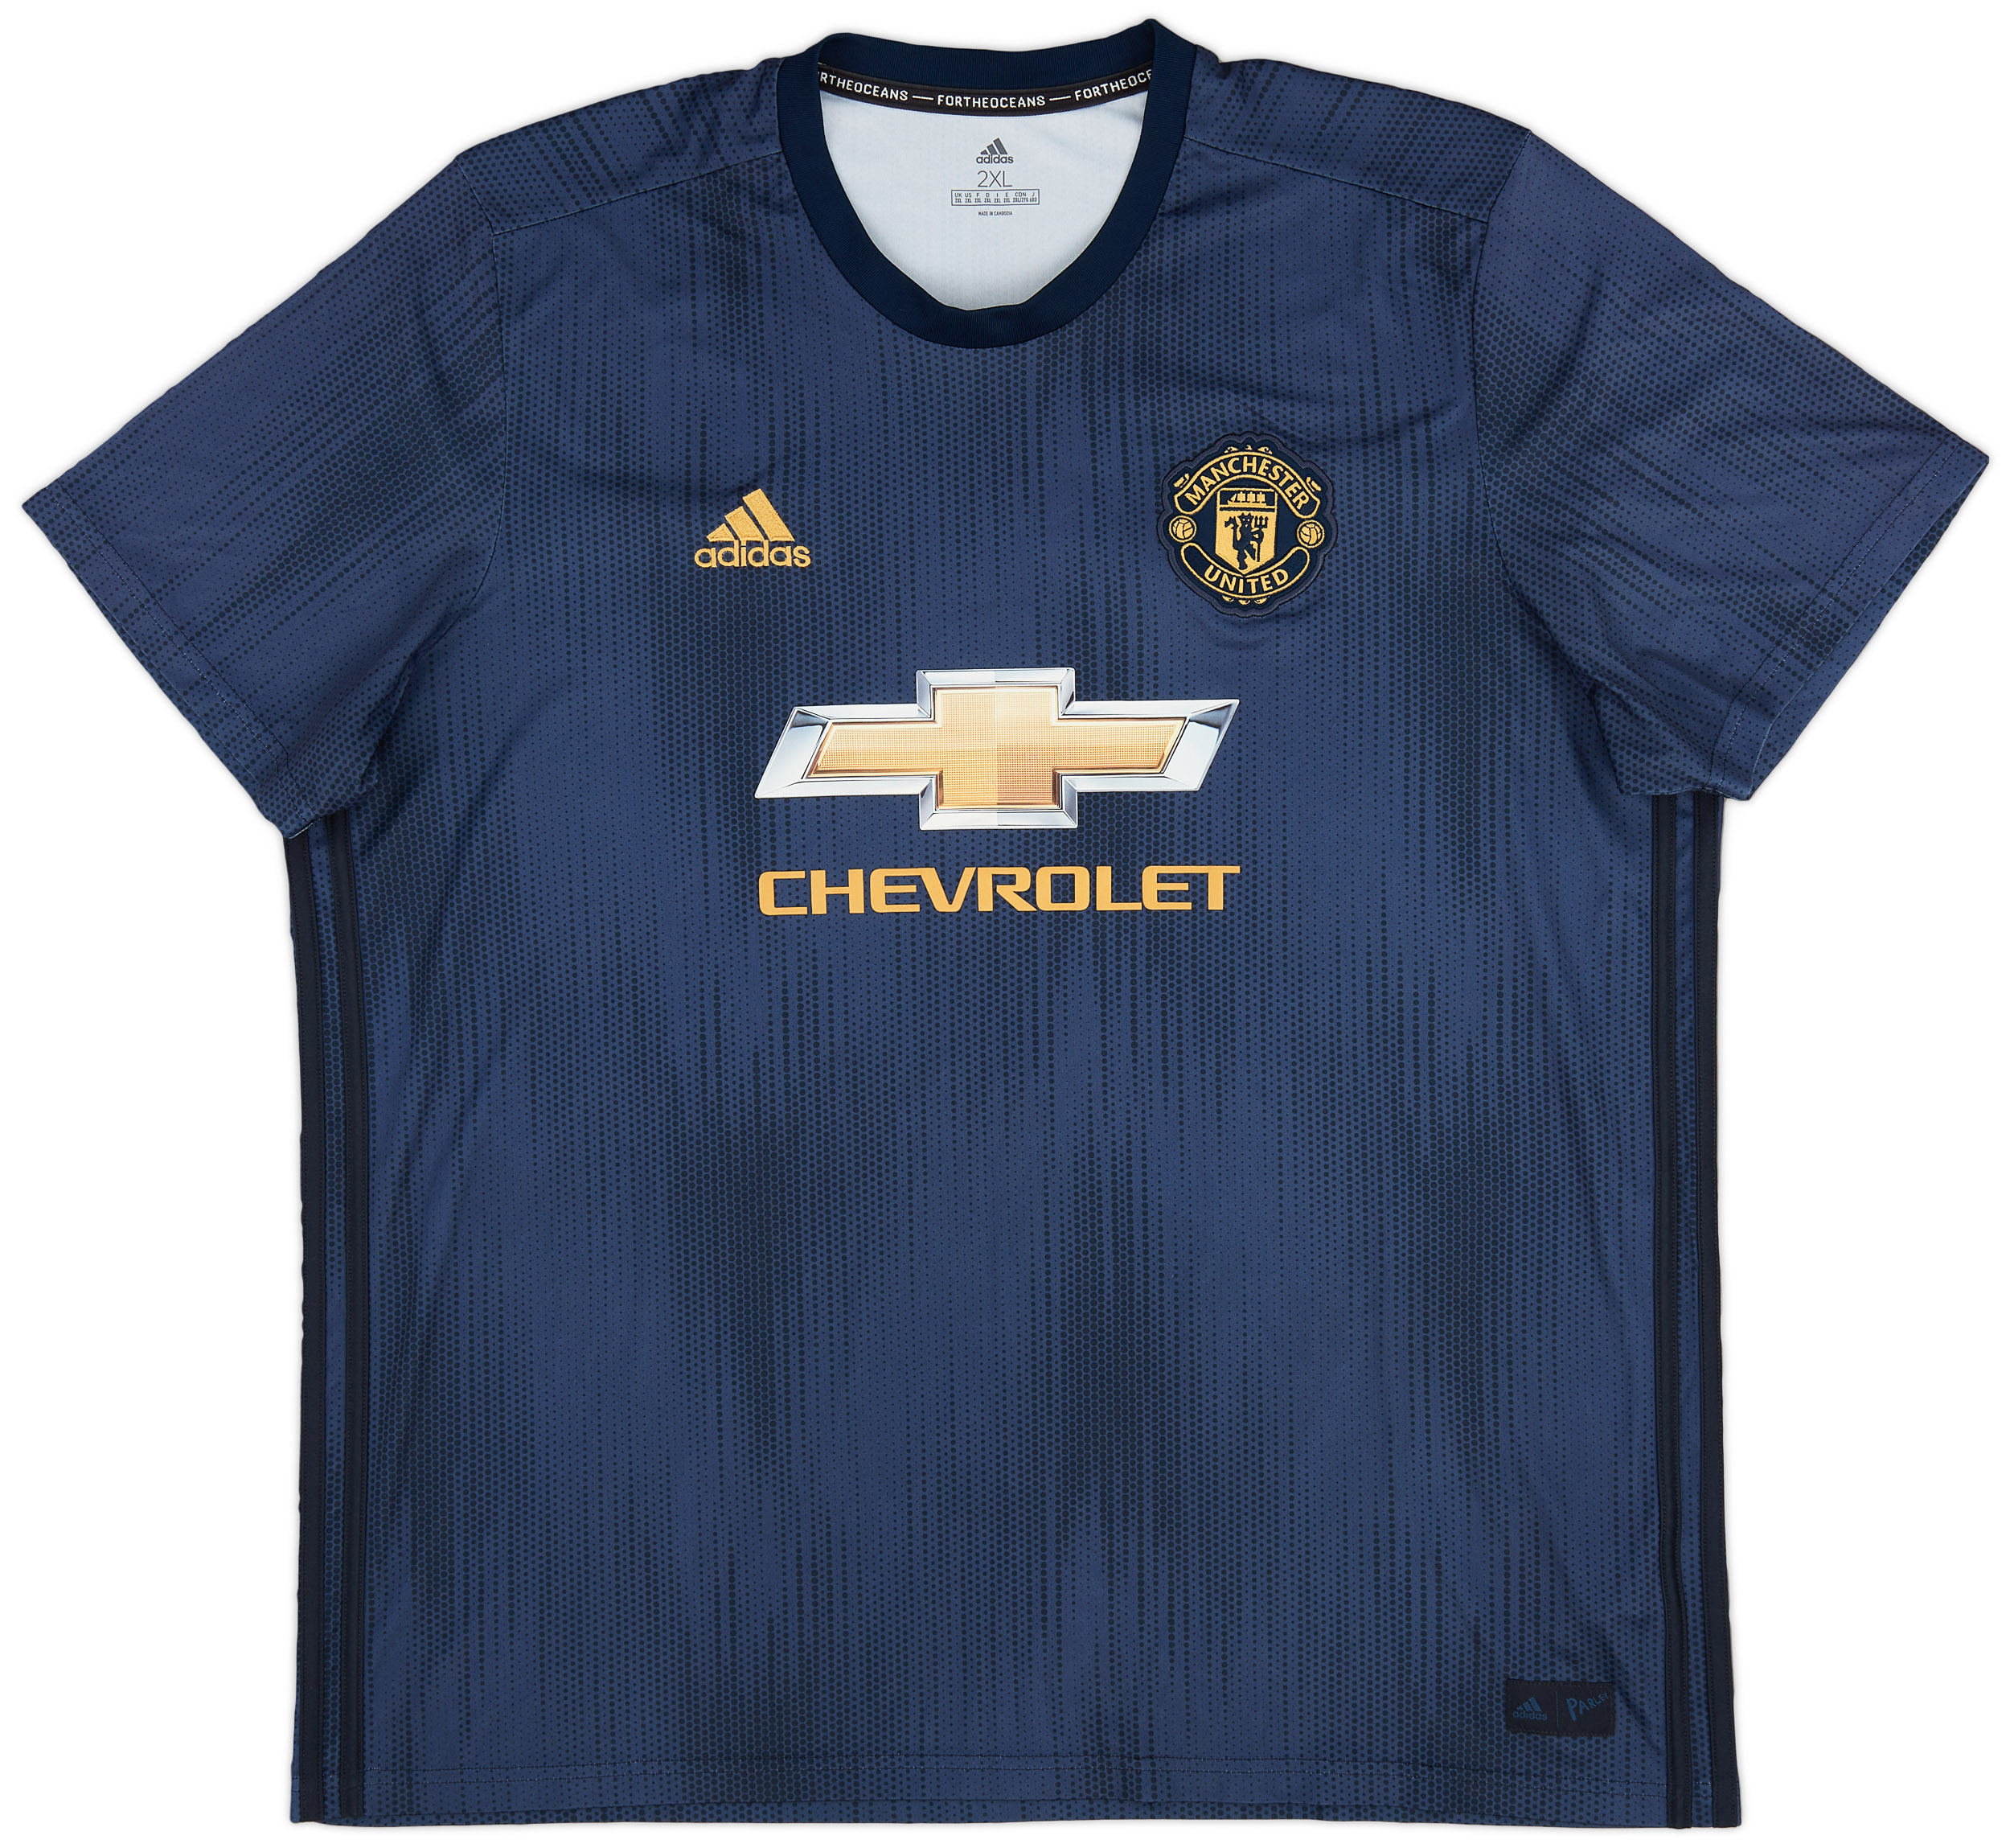 2018-19 Manchester United Third Shirt - 9/10 - ()